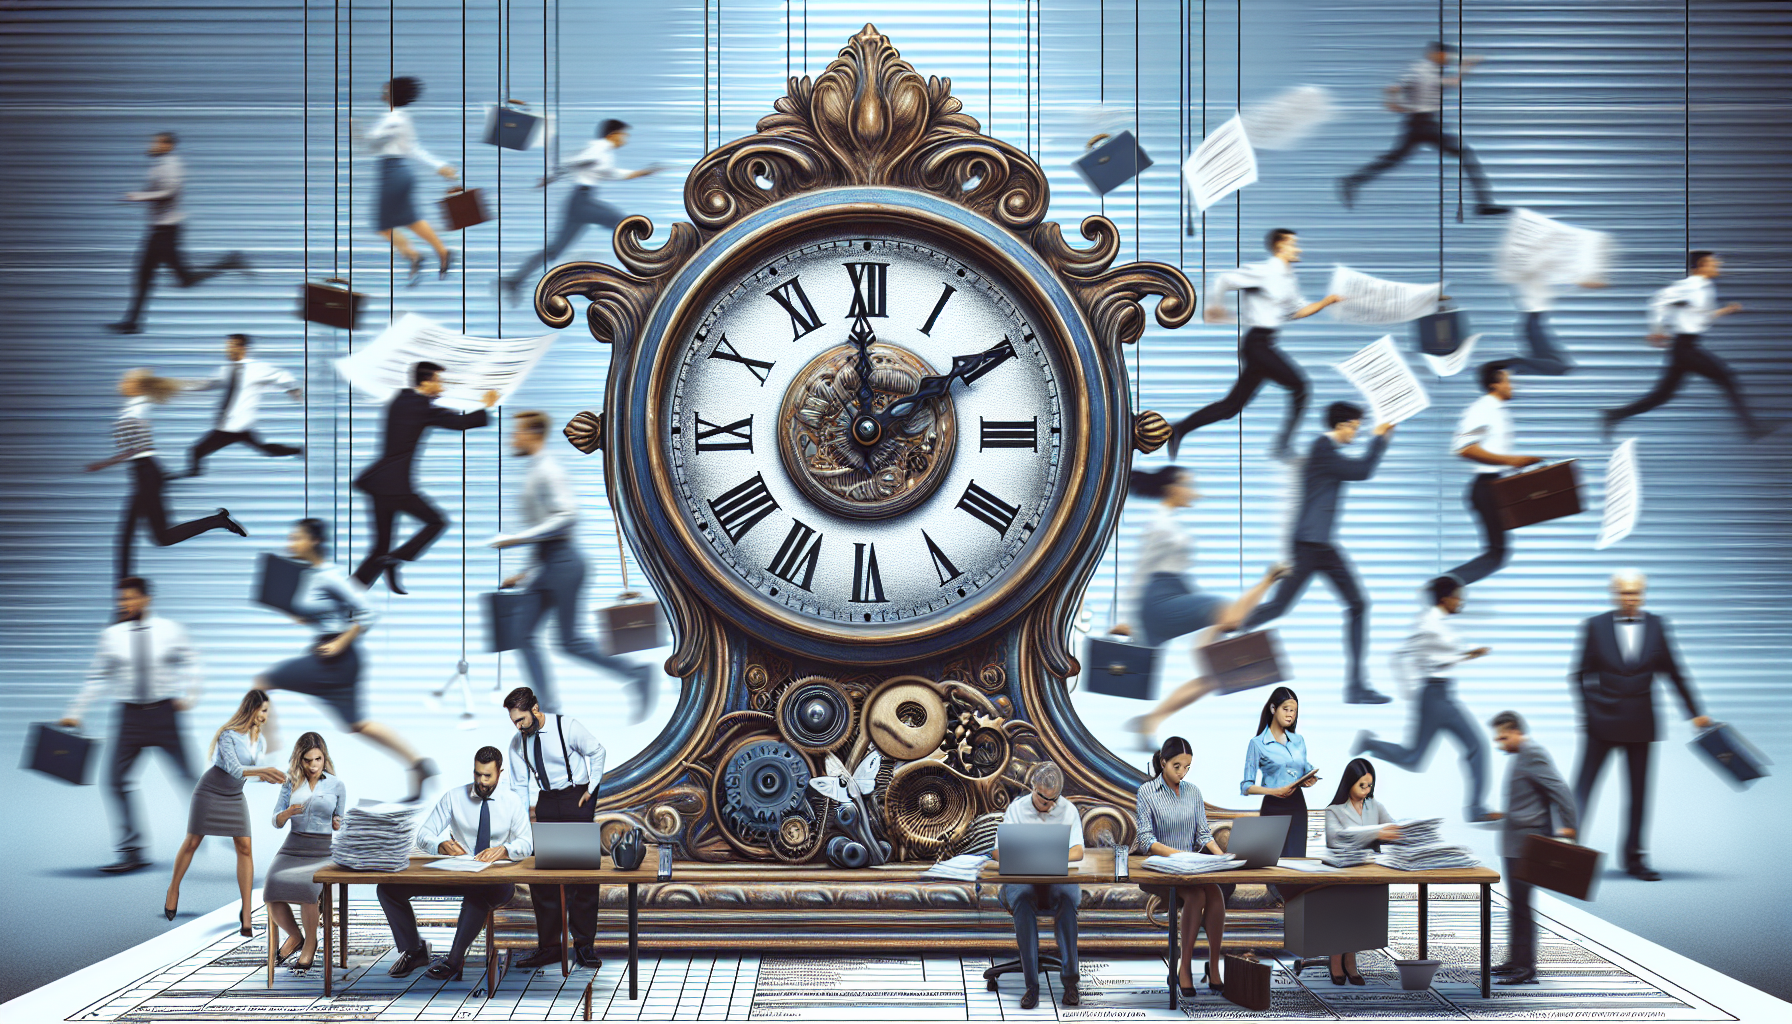 Illustration of a clock showing efficient time management